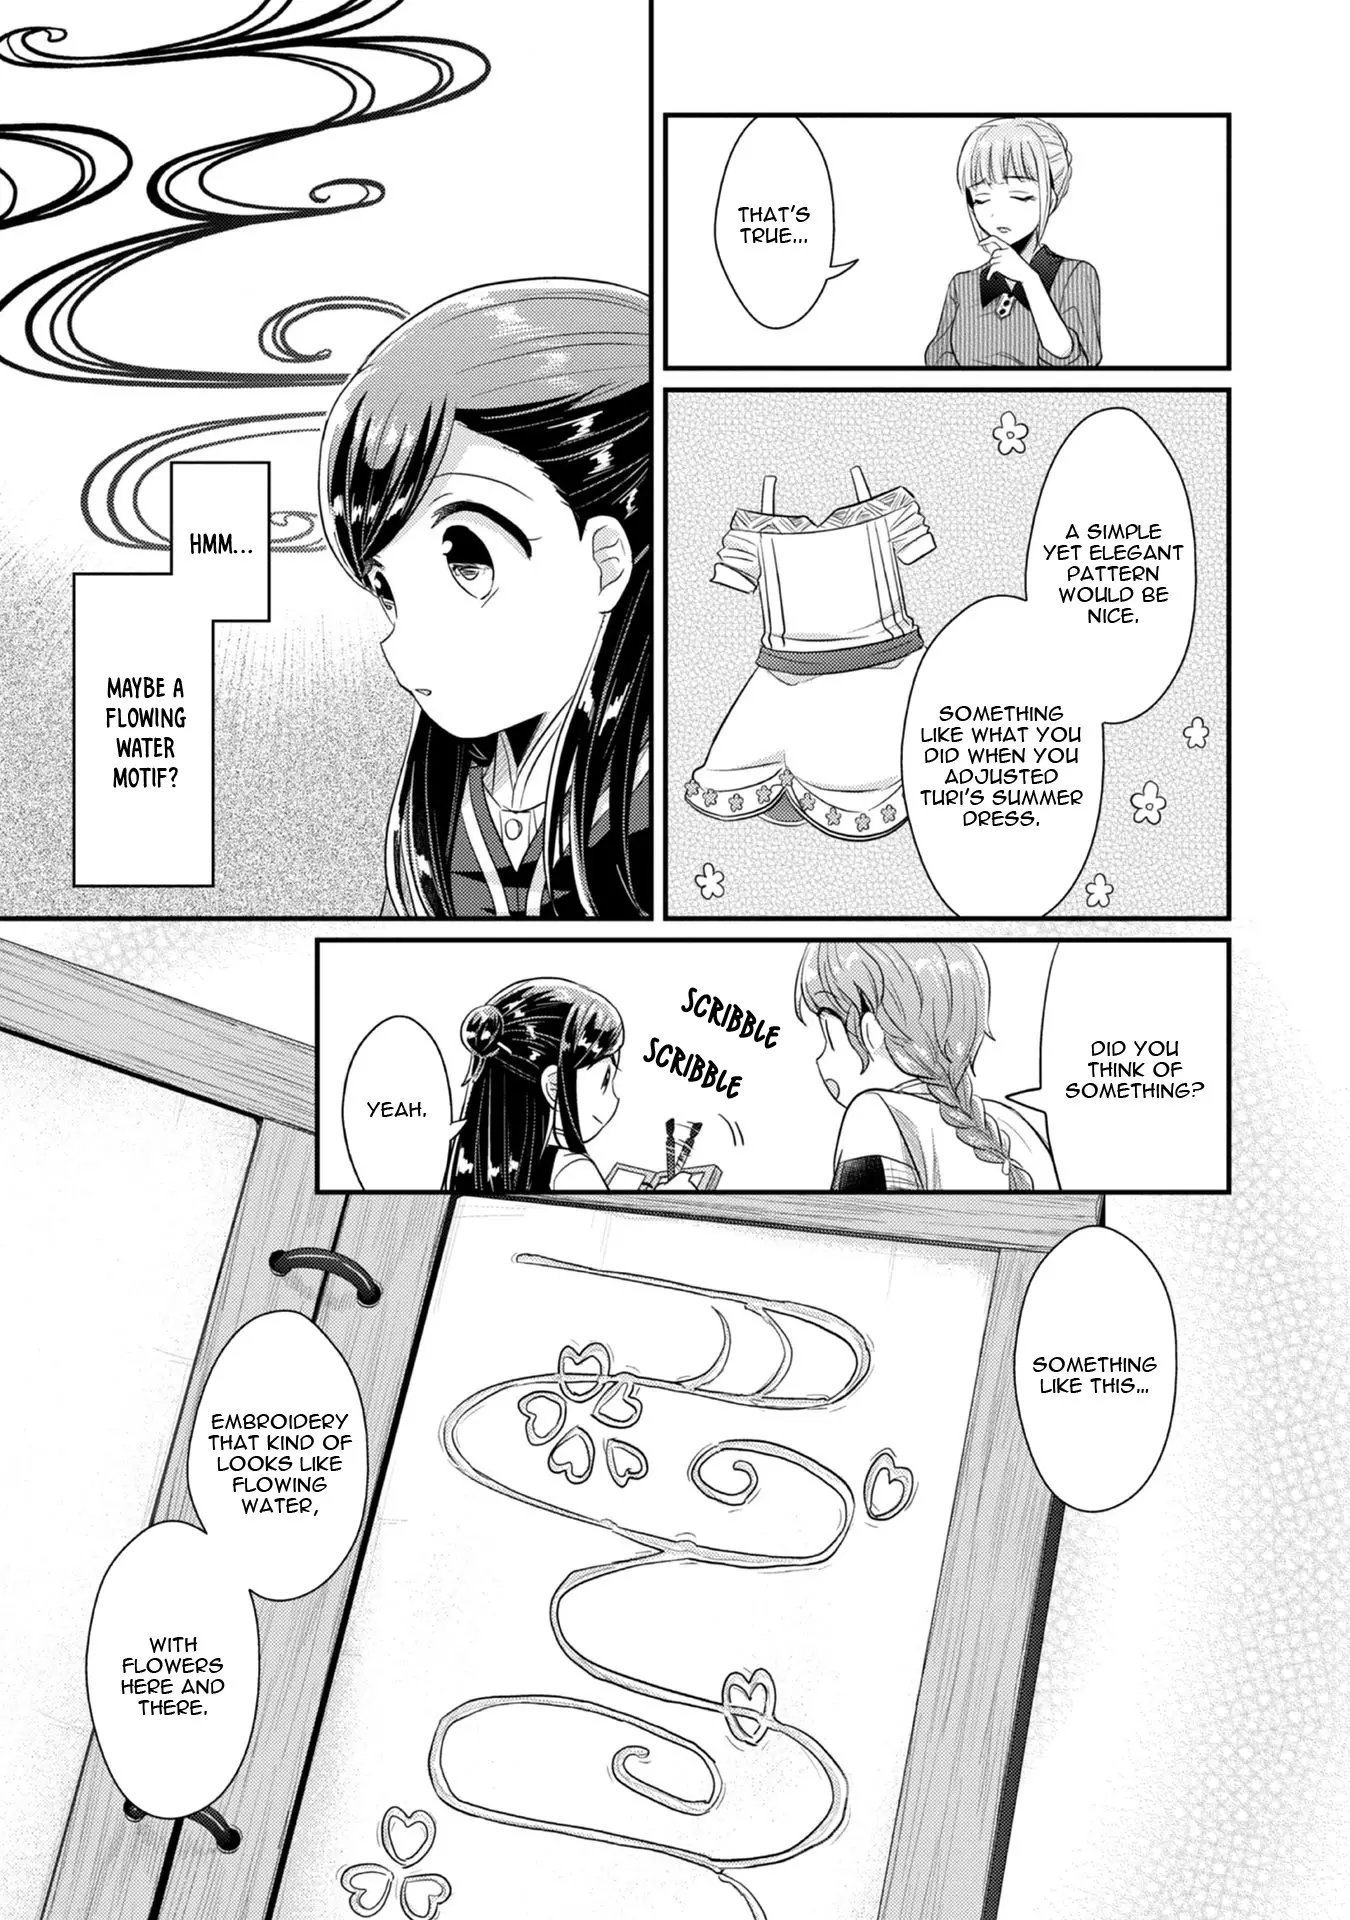 Manga Part 2 Volume 2, Ascendance of a Bookworm Wiki